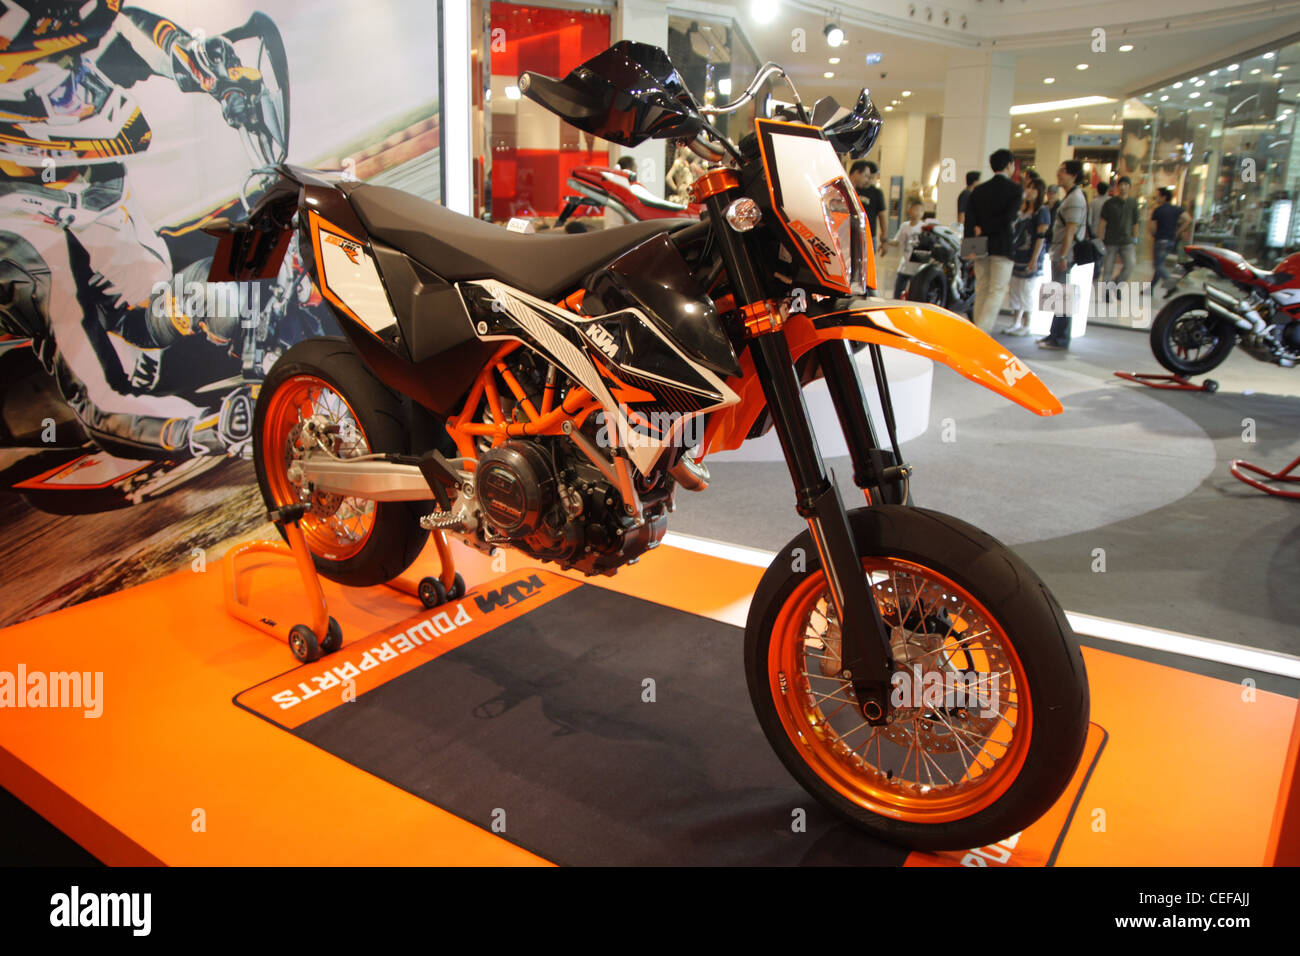 Présentation de la moto KTM 690 SMC